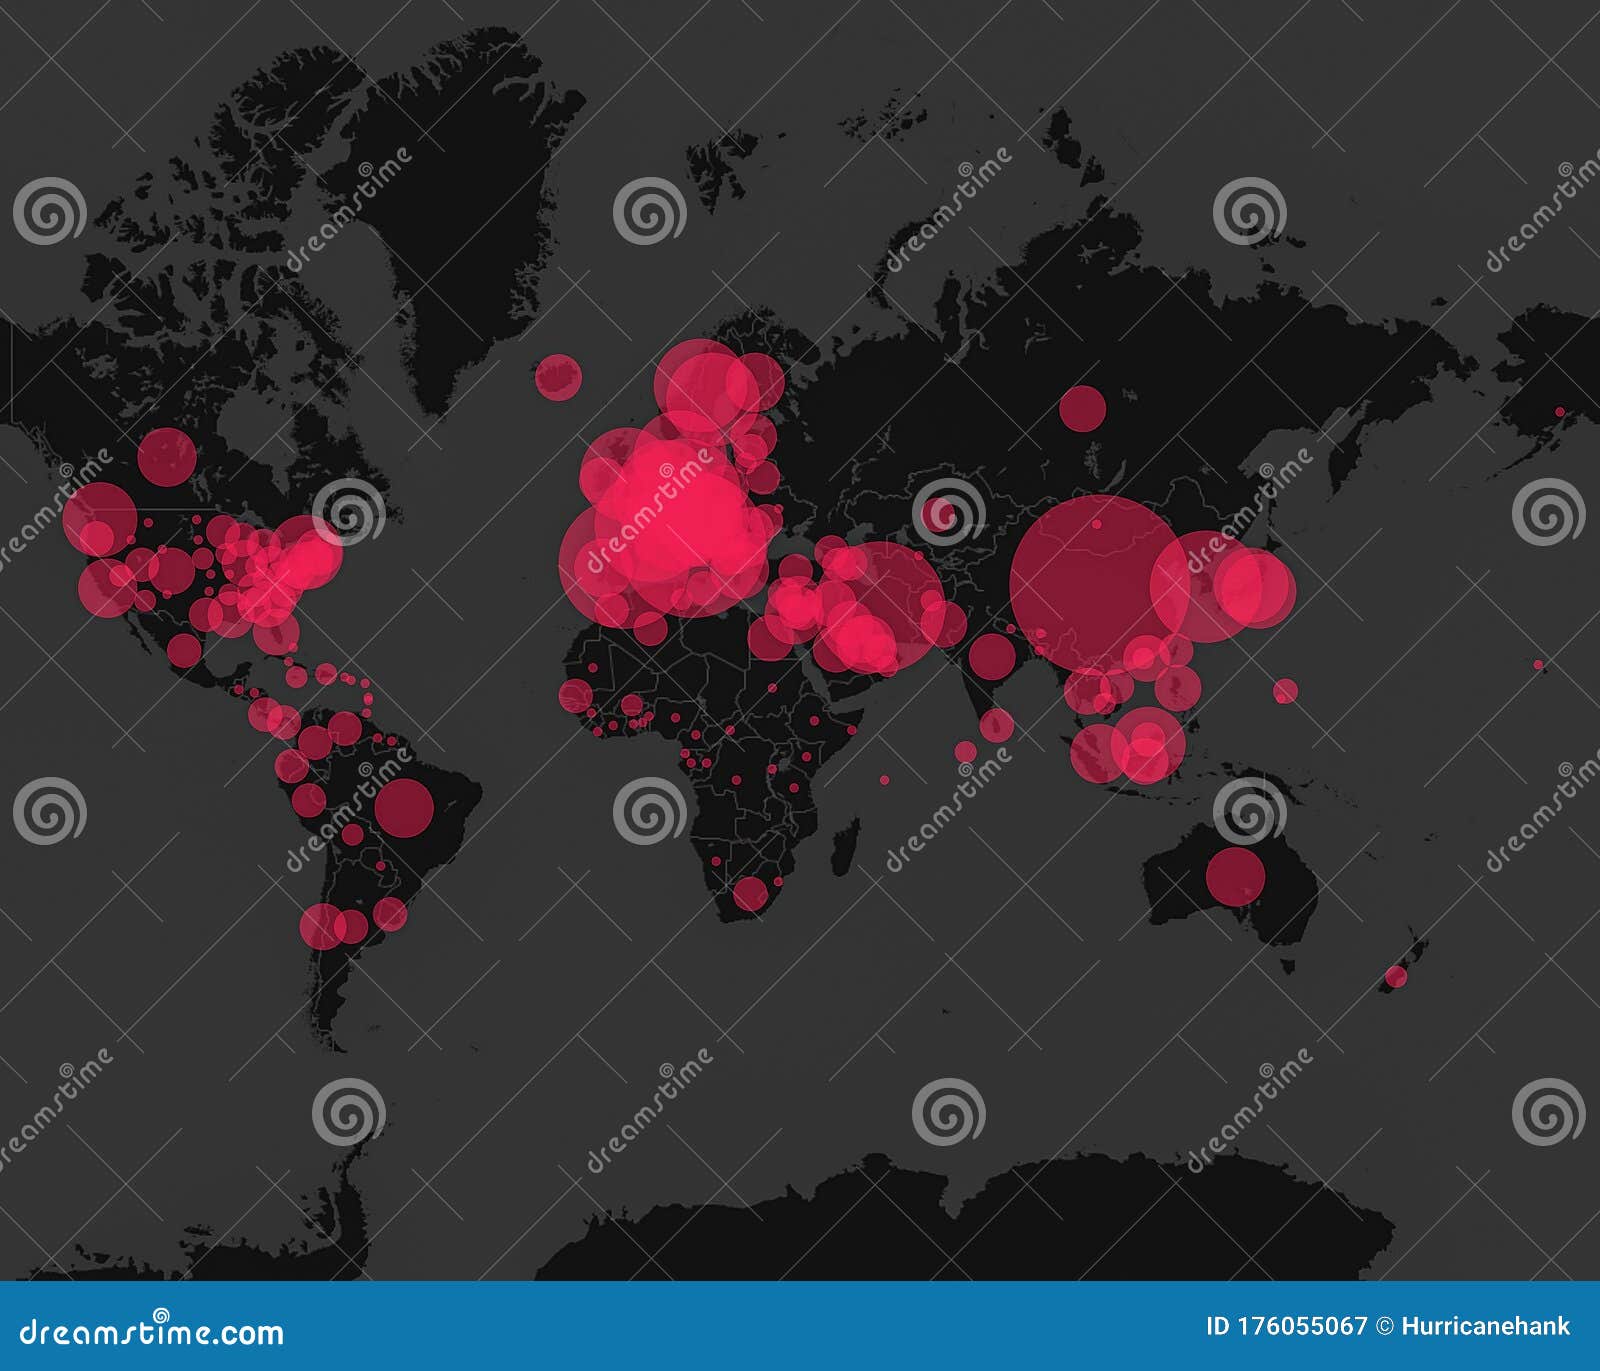 corona virus covid 19 spread on world map